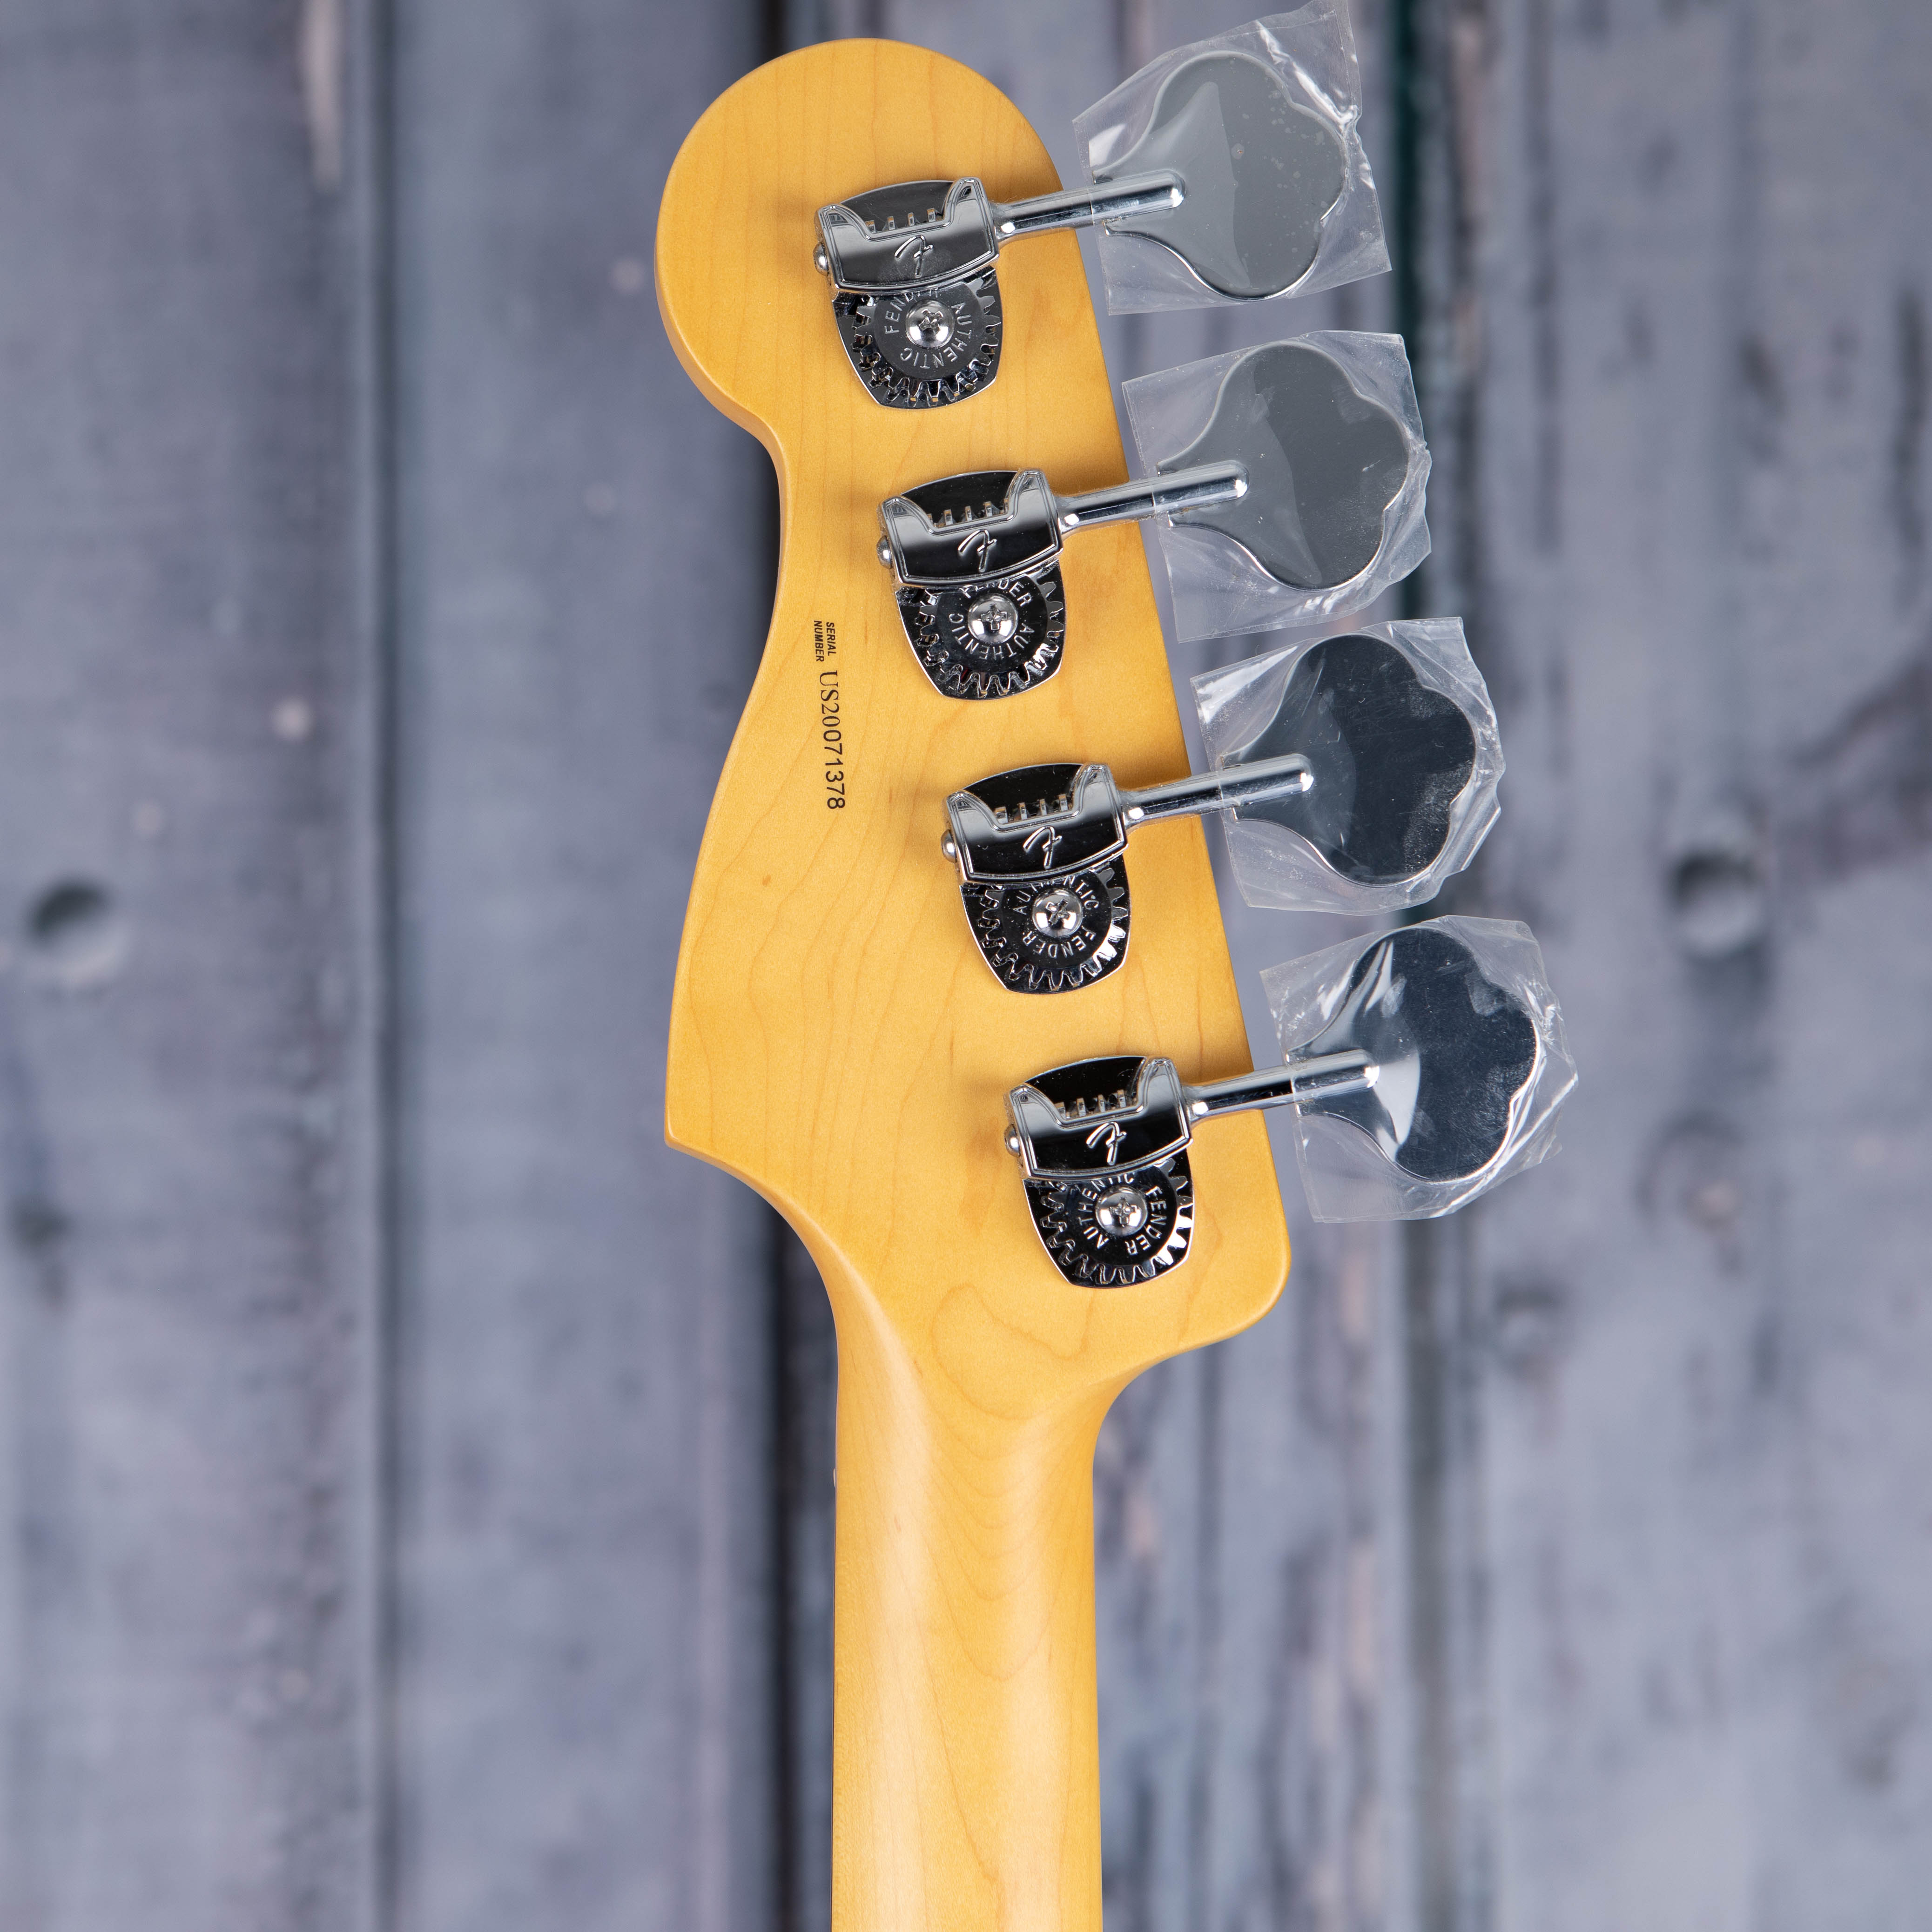 Fender American Professional II Precision Bass Guitar, Mercury, back headstock